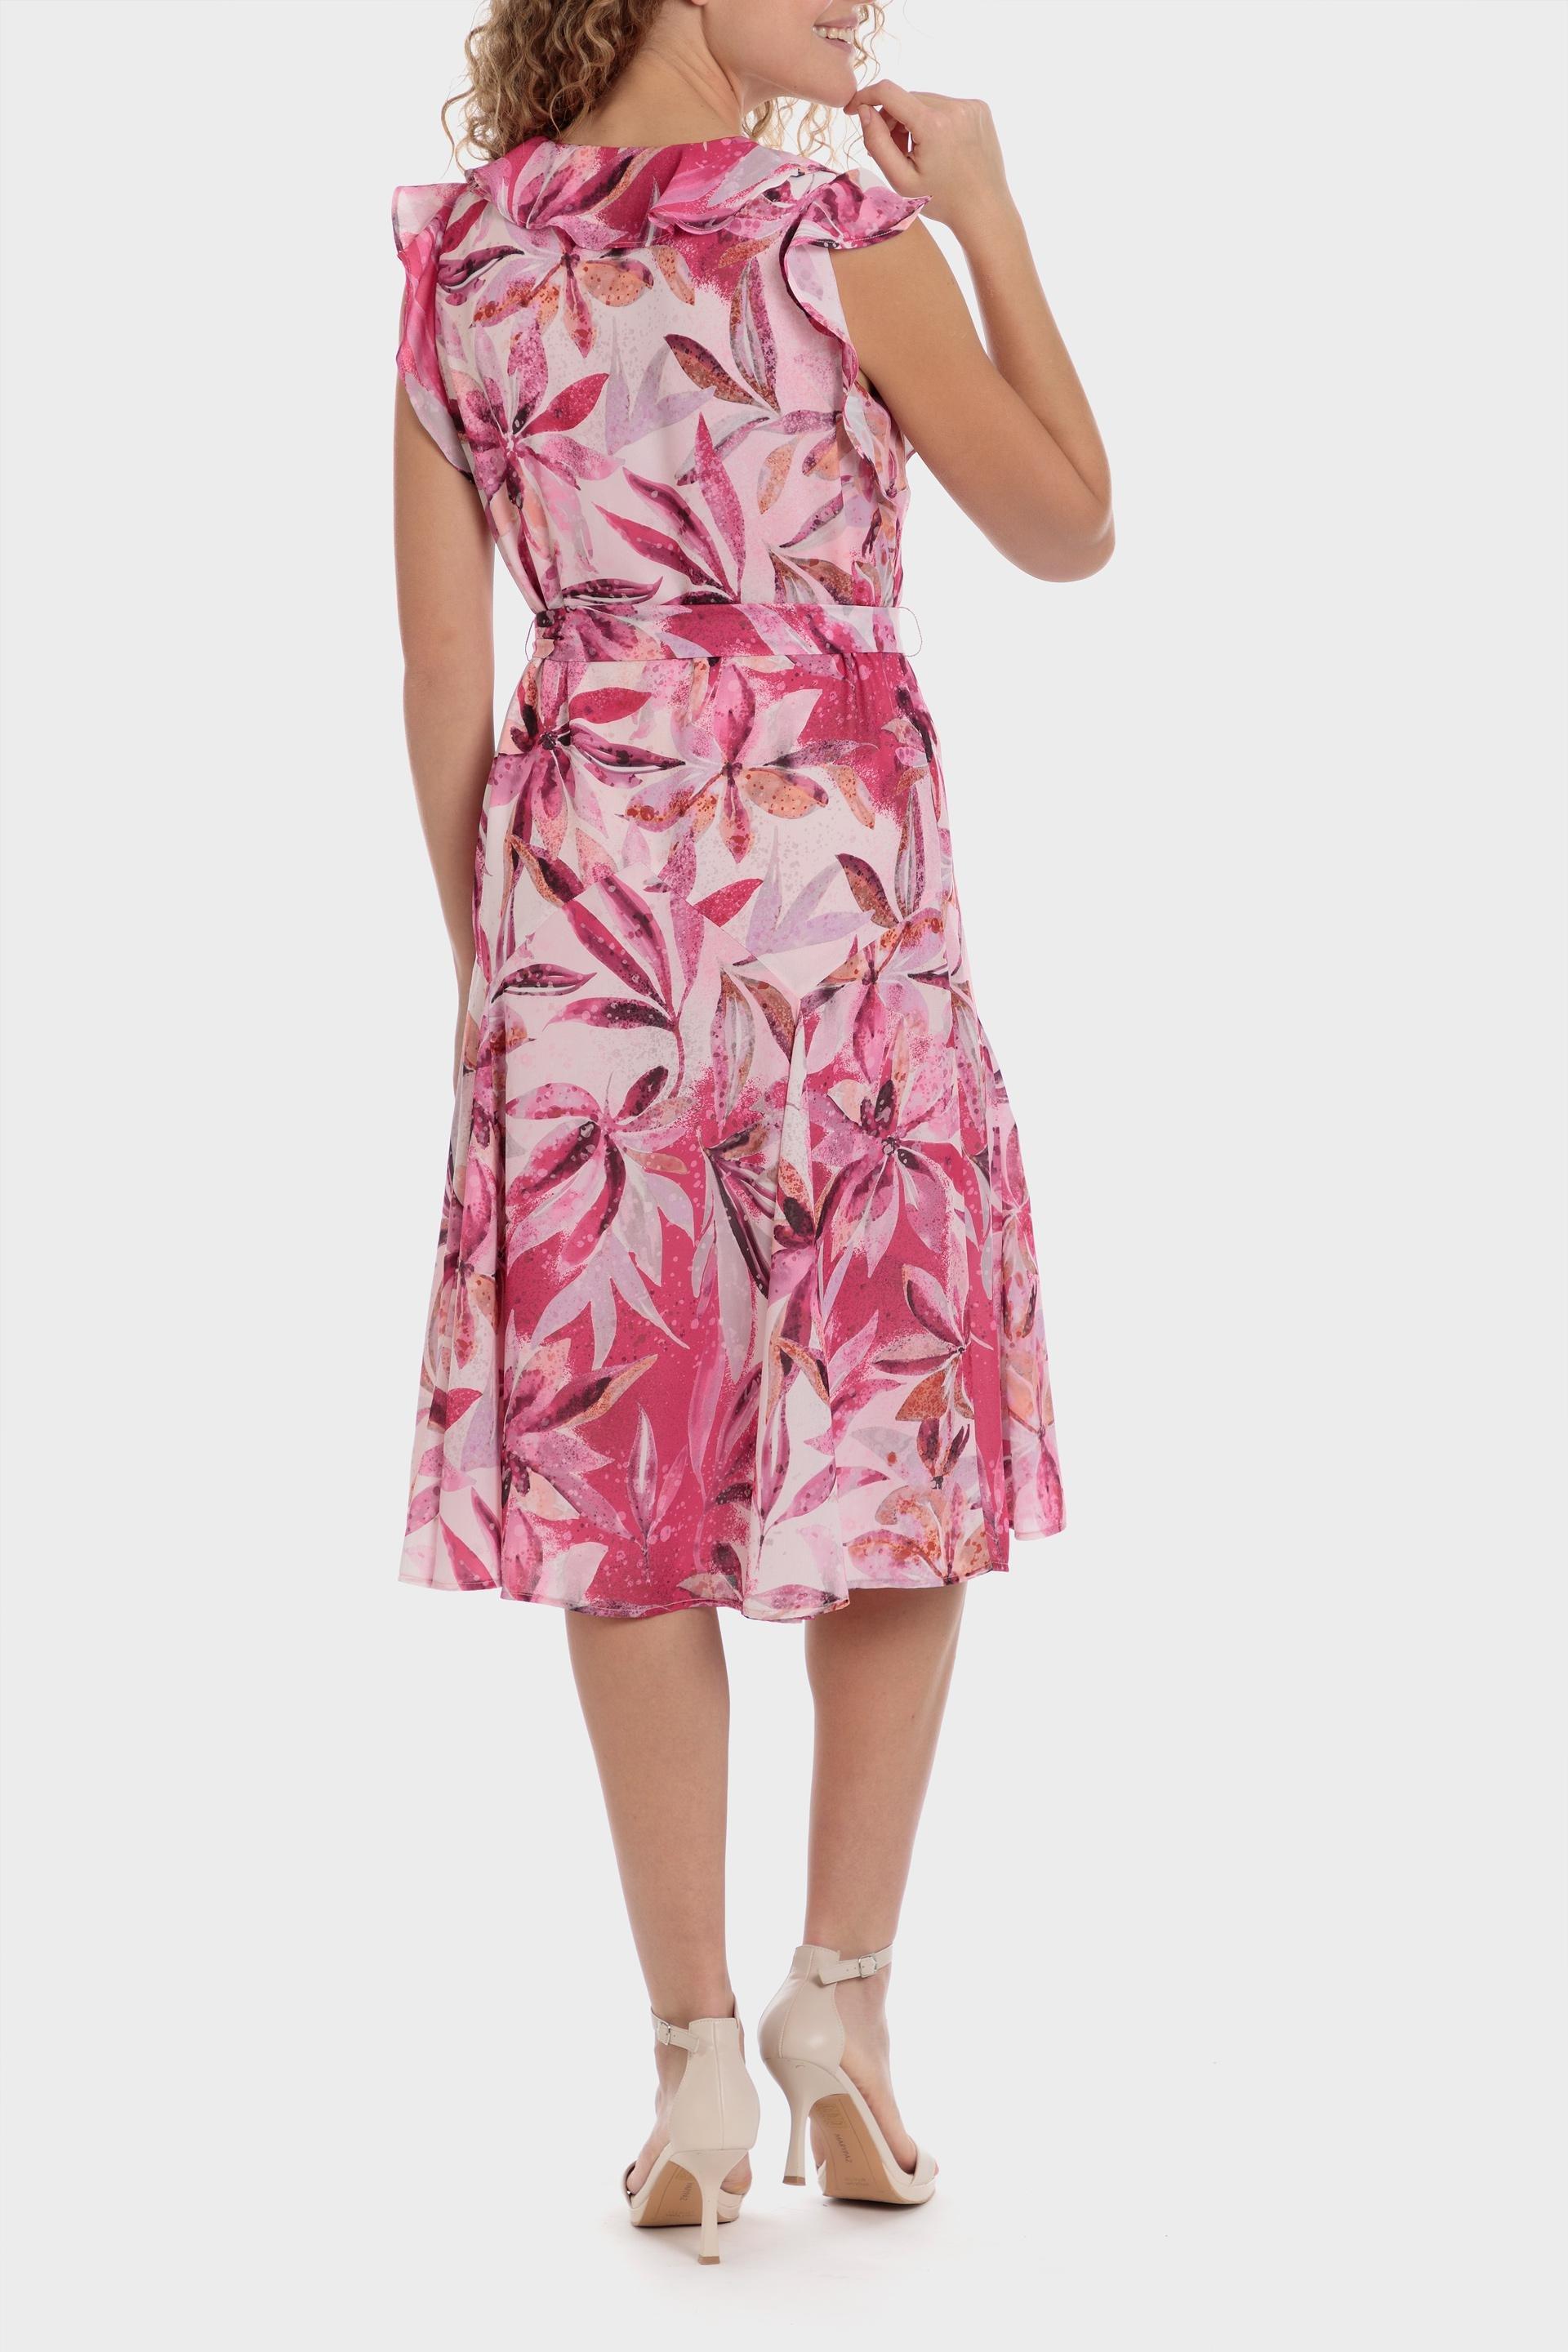 Punt Roma - Floral print dress